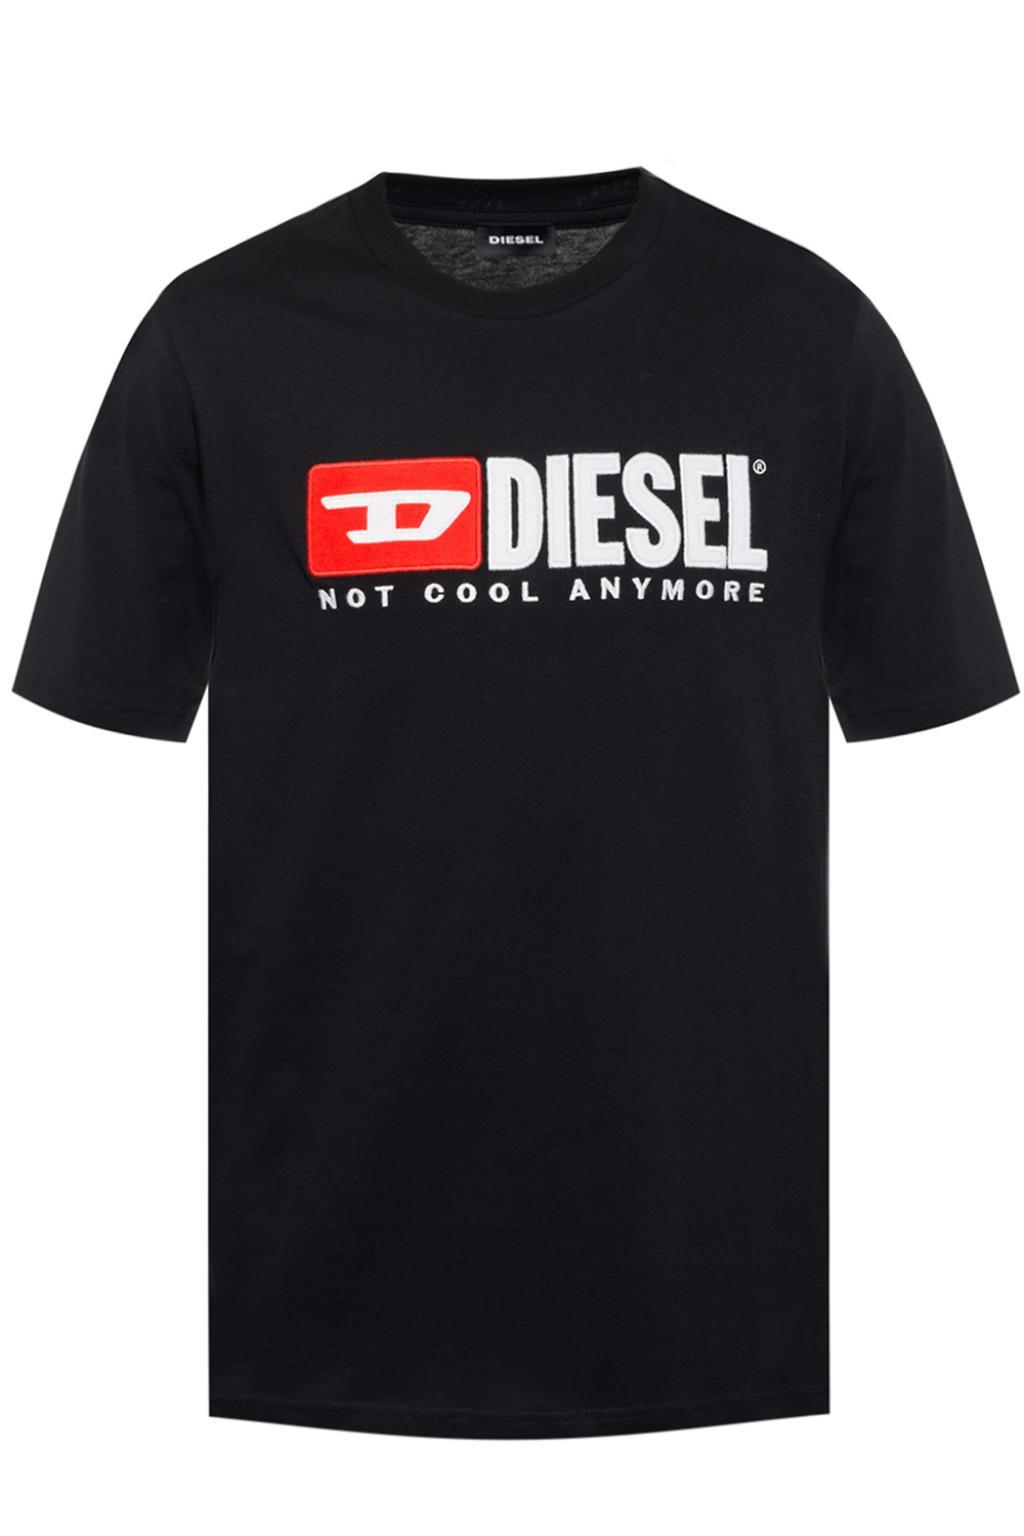 DIESEL Logo-embroidered T-shirt in Black for Men - Lyst